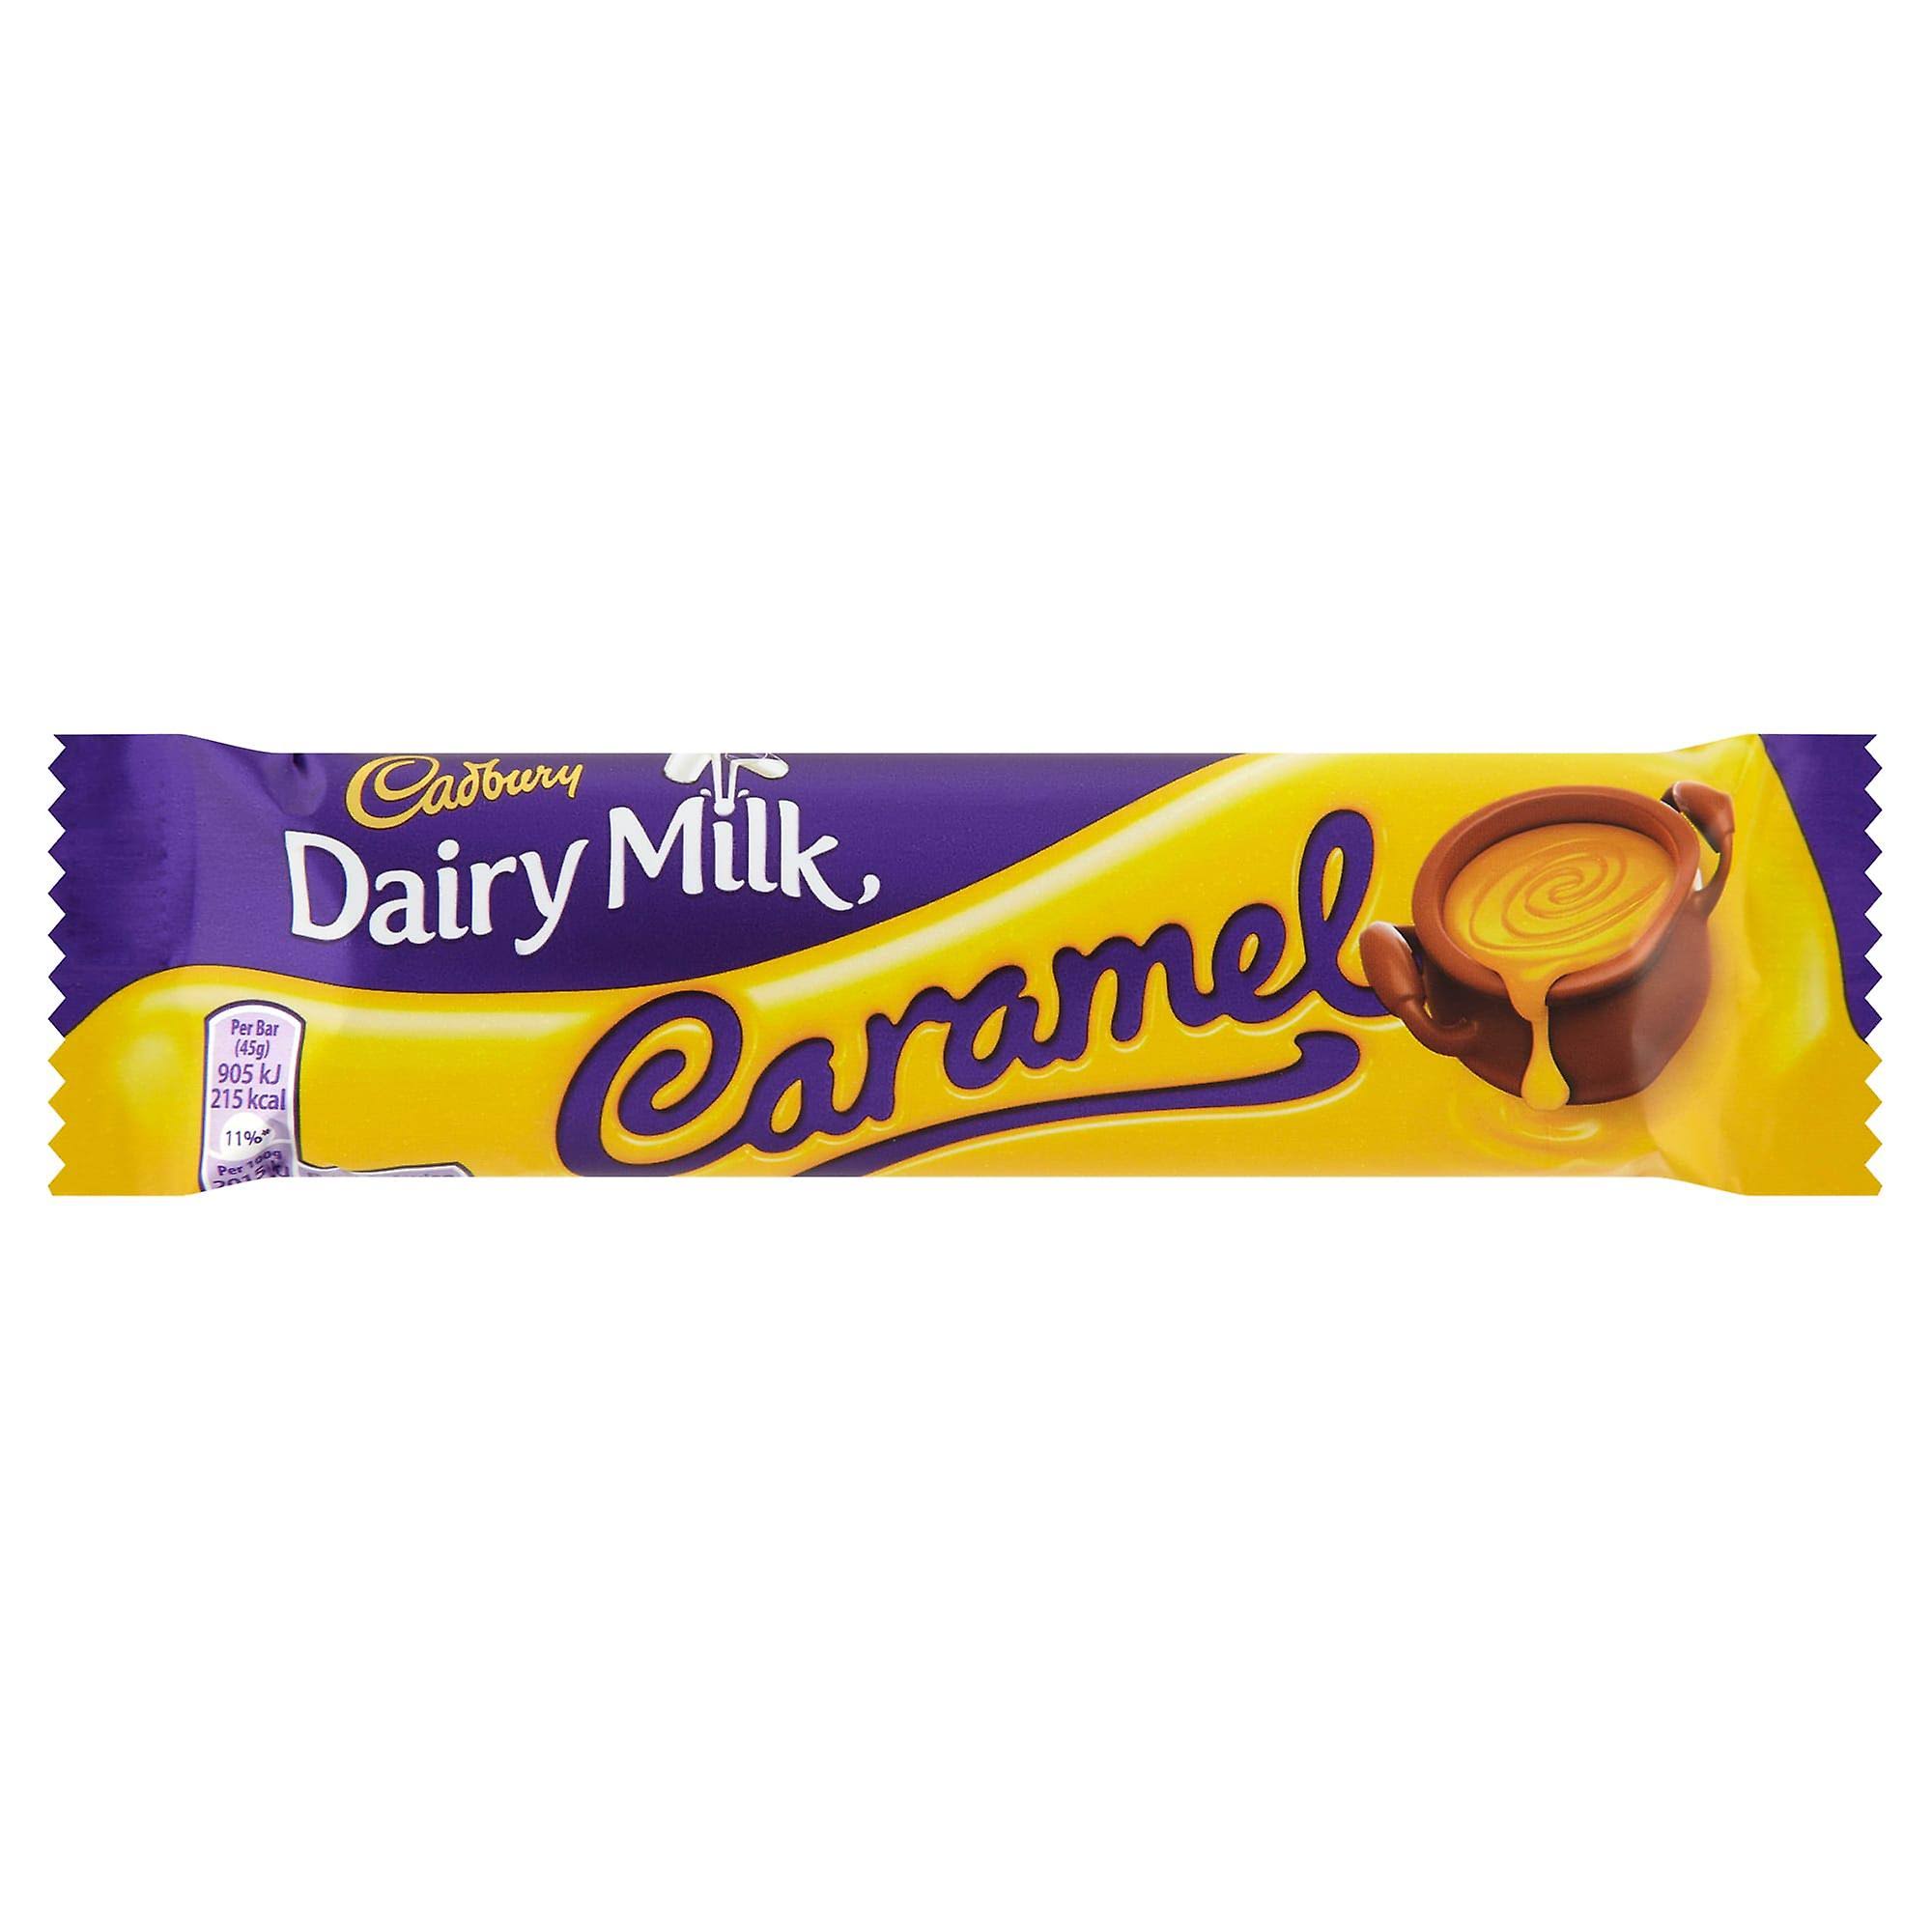 Cadbury Dairy Milk Single Bar - Caramel, 45g